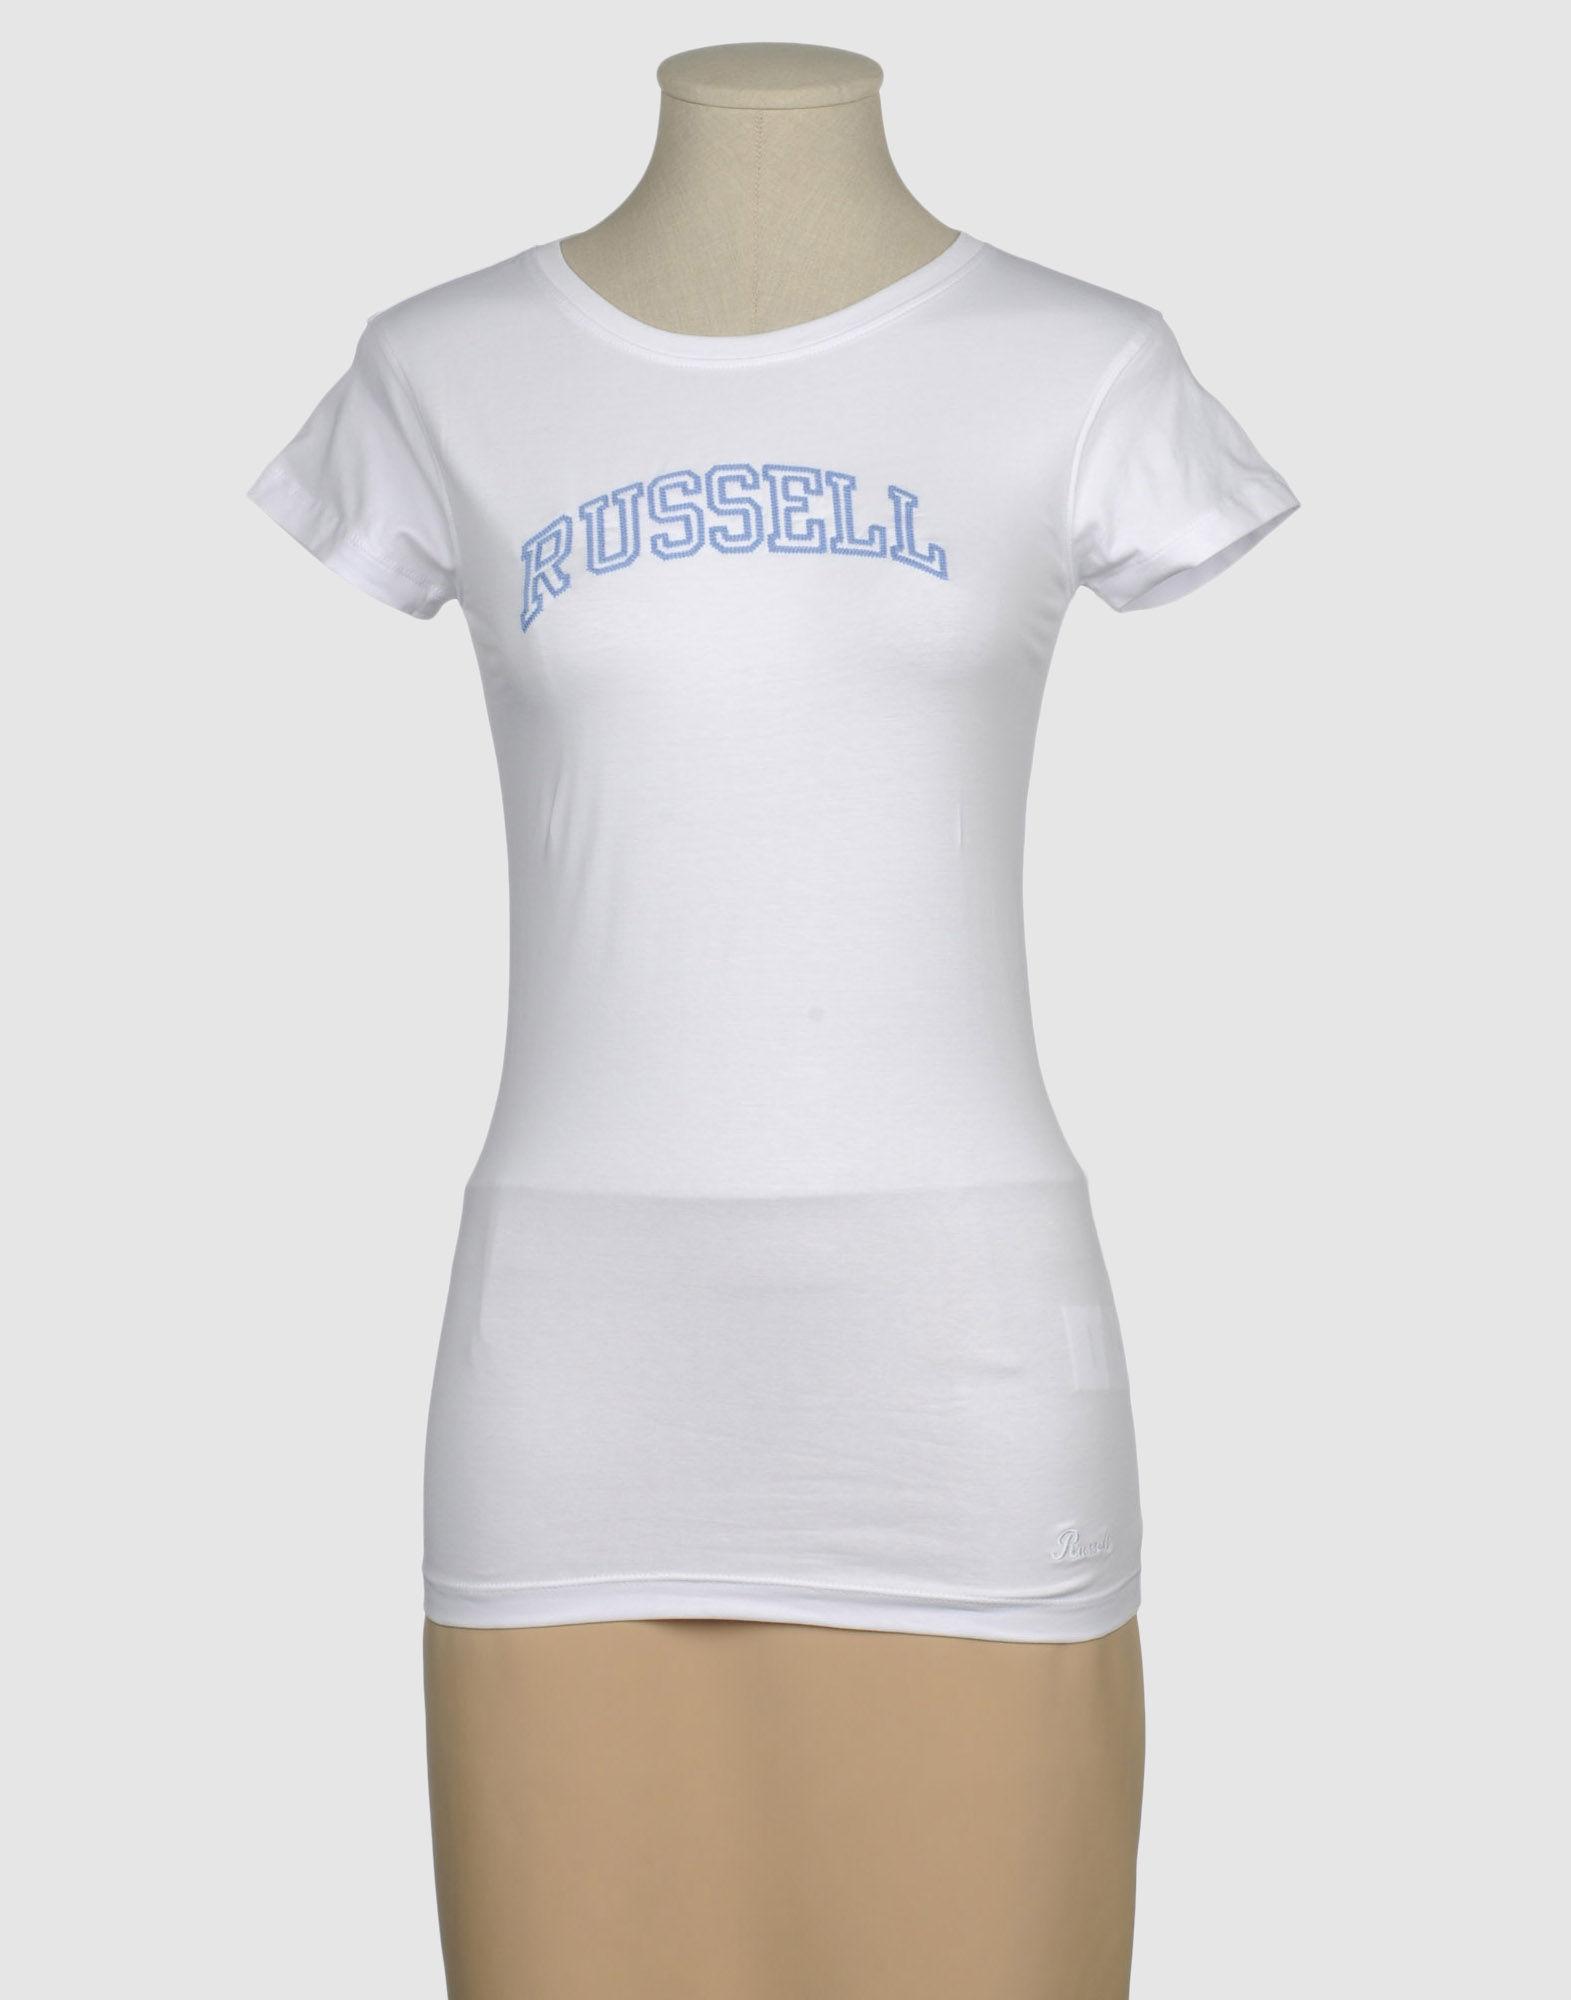 Foto Russell Athletic Camisetas De Manga Corta Mujer Blanco